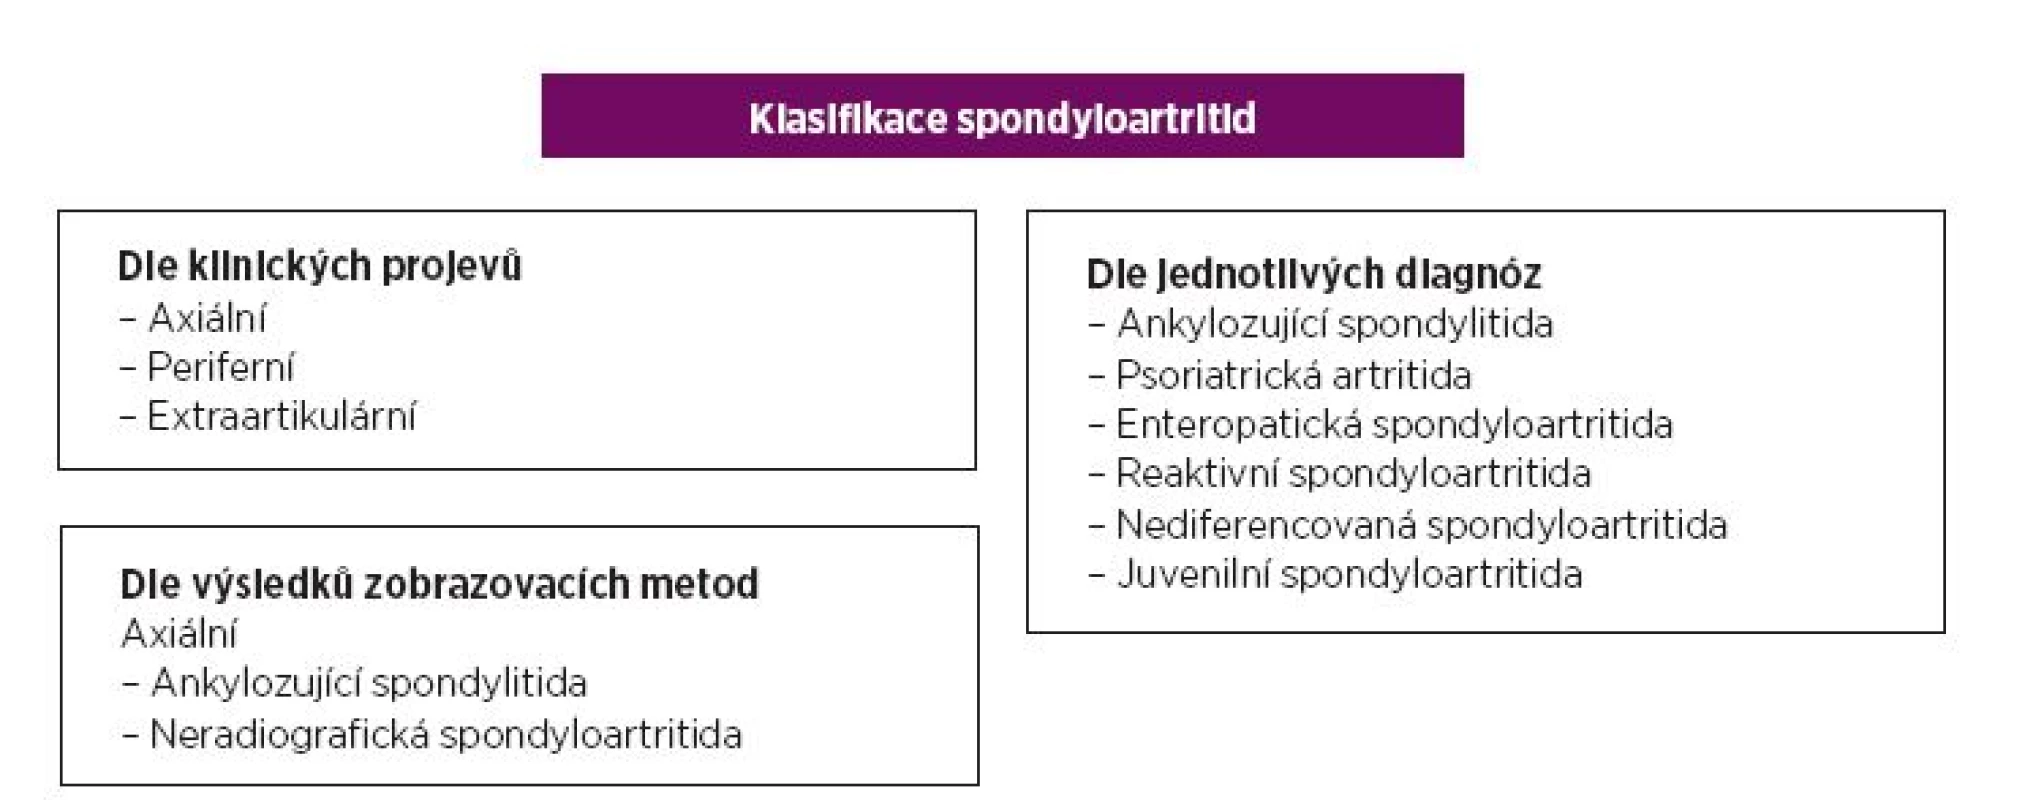 Klasifikace spondyloartritid (1)